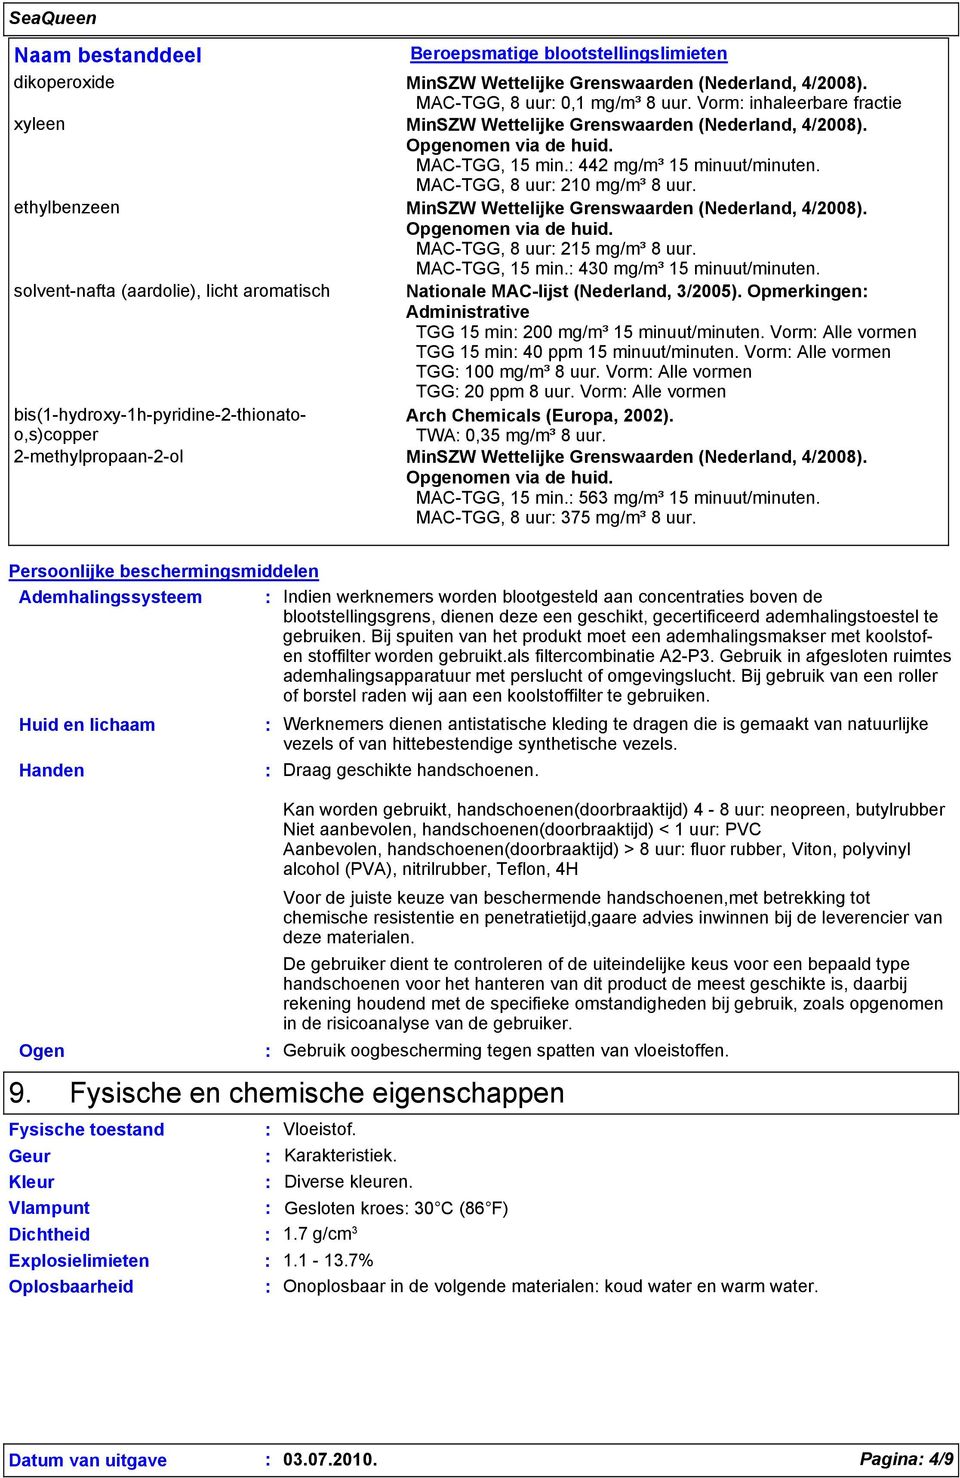 ethylbenzeen MinSZW Wettelijke Grenswaarden (Nederland, 4/2008). Opgenomen via de huid. MAC-TGG, 8 uur 215 mg/m³ 8 uur. MAC-TGG, 15 min. 430 mg/m³ 15 minuut/minuten.